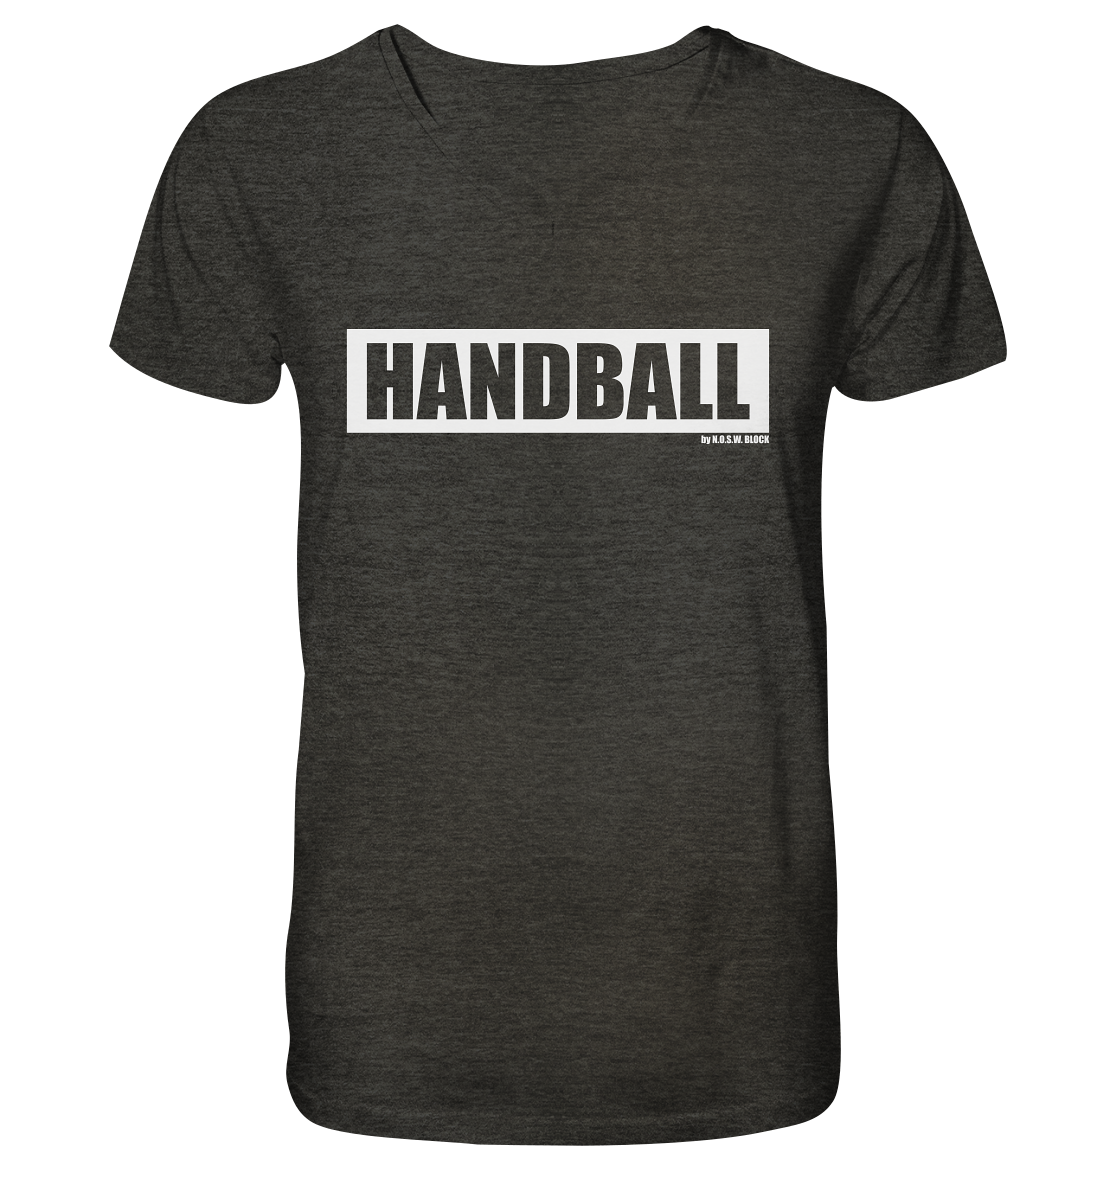 N.O.S.W. BLOCK Teamsport Shirt "HANDBALL" Männer Organic T-Shirt dark heather grau